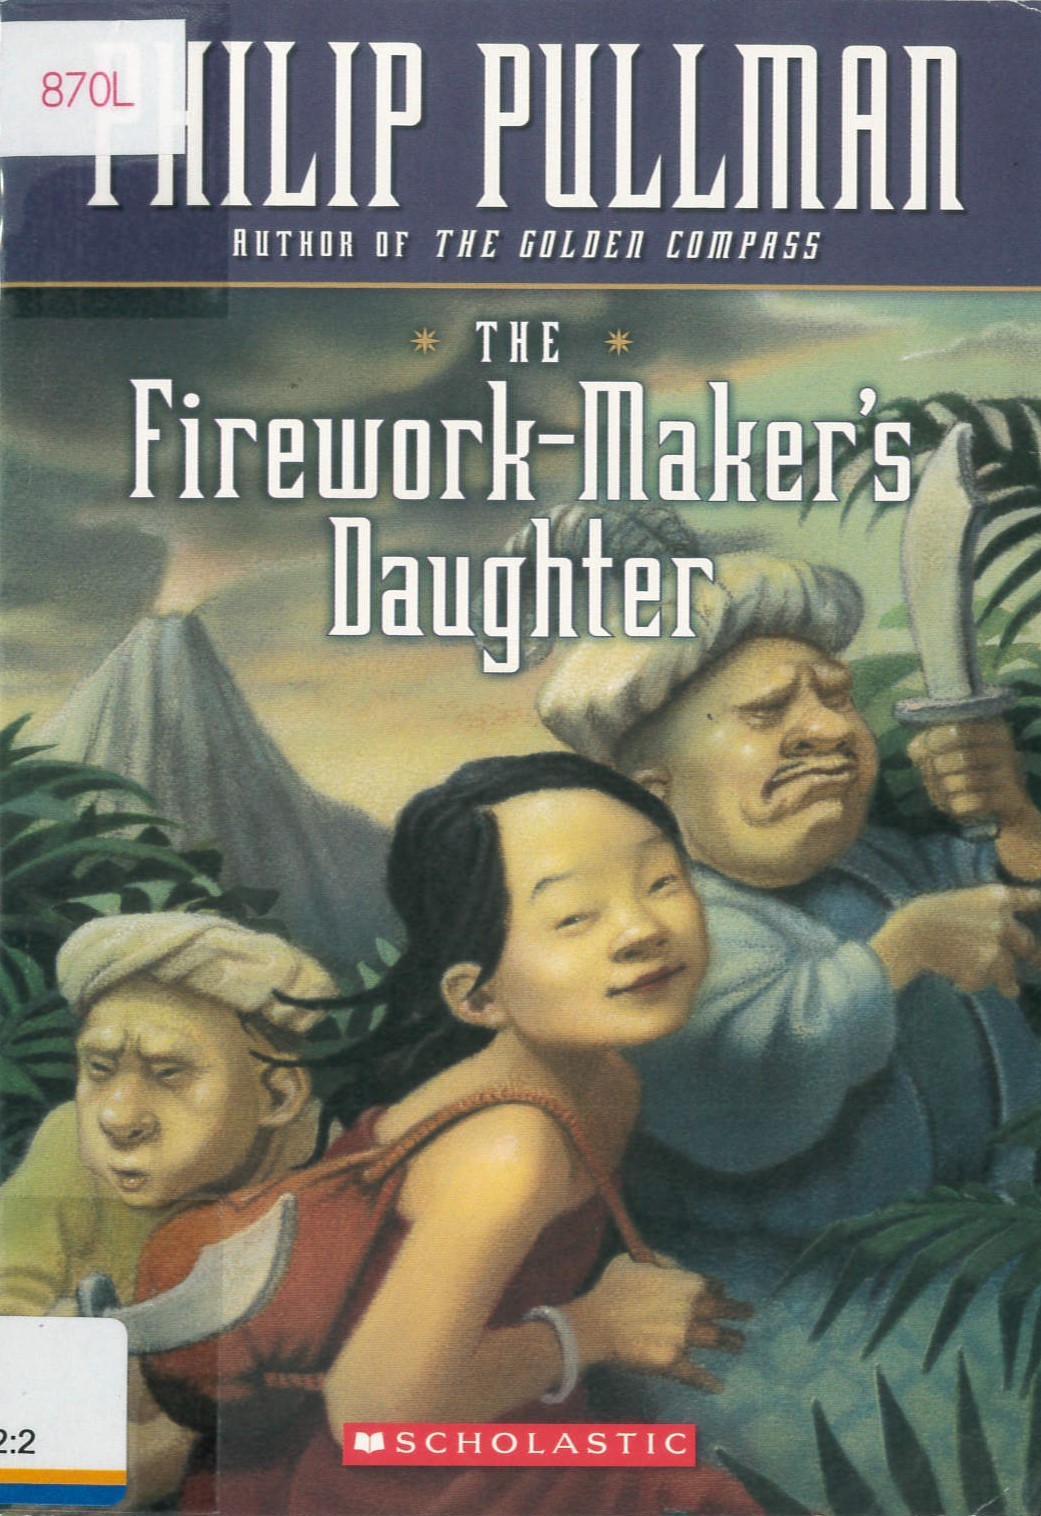 The firework-maker